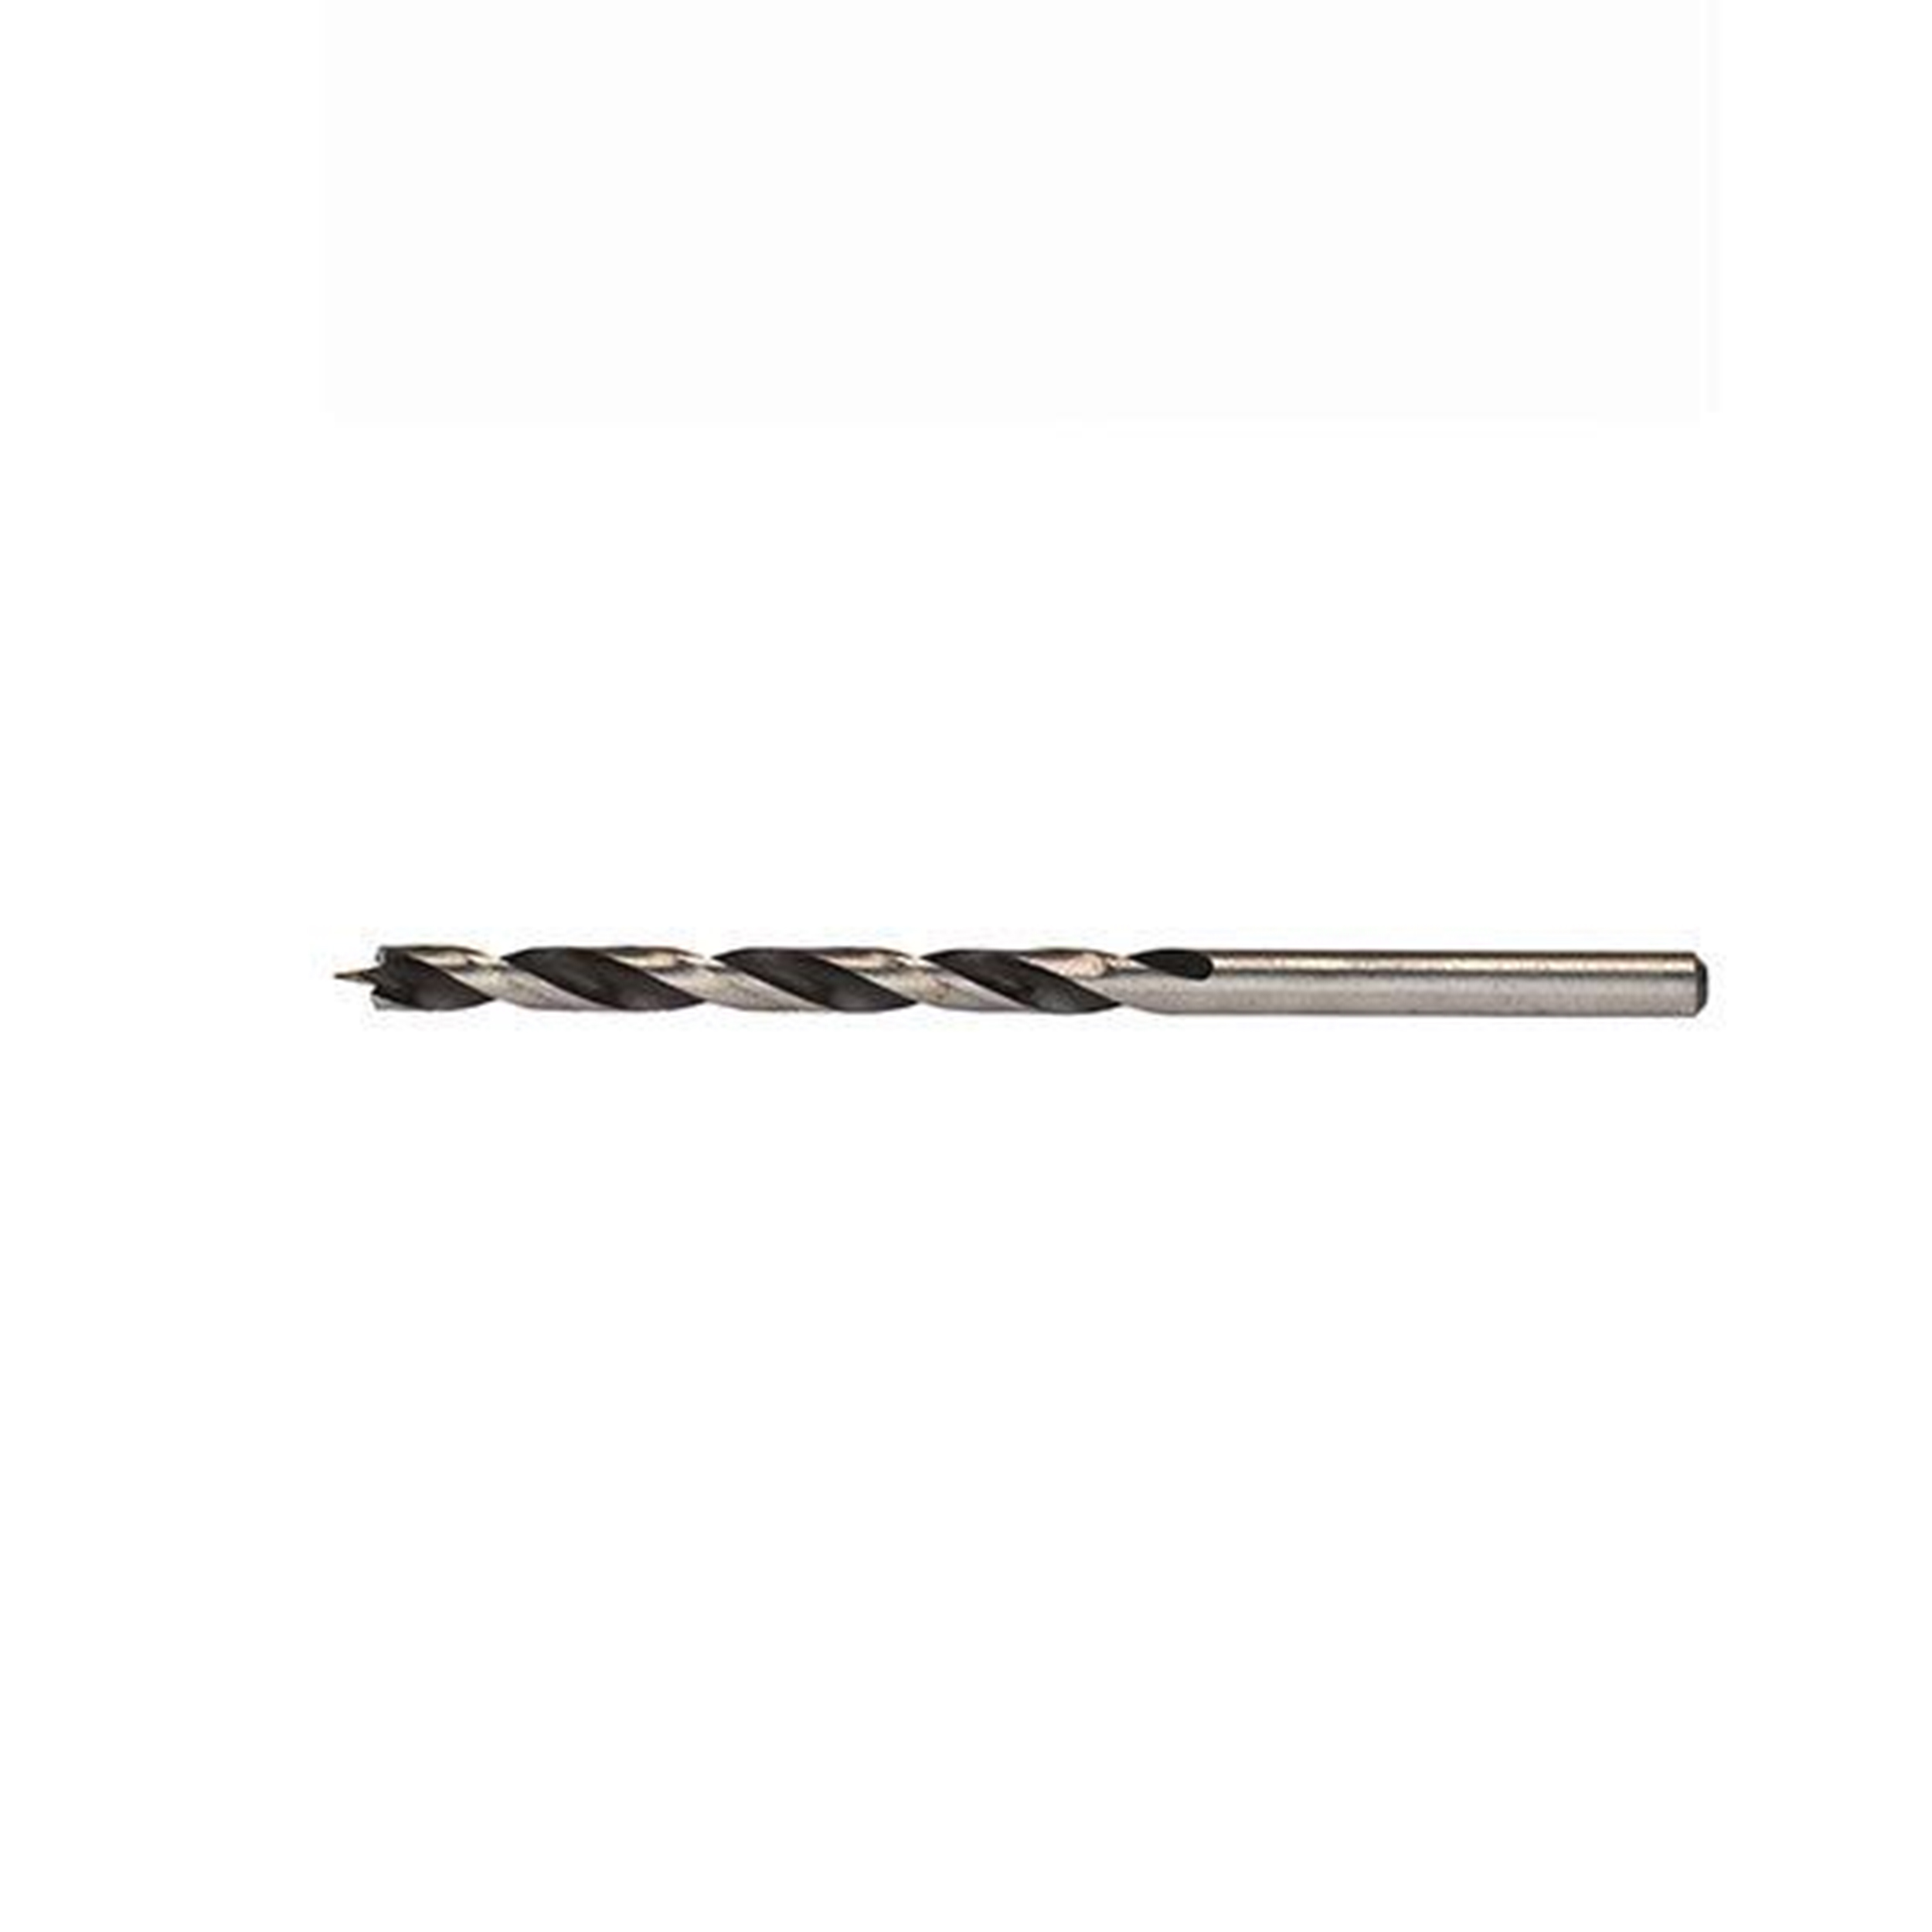 7/32-inch Chrome-vanadium Steel Brad Point Drill Bit